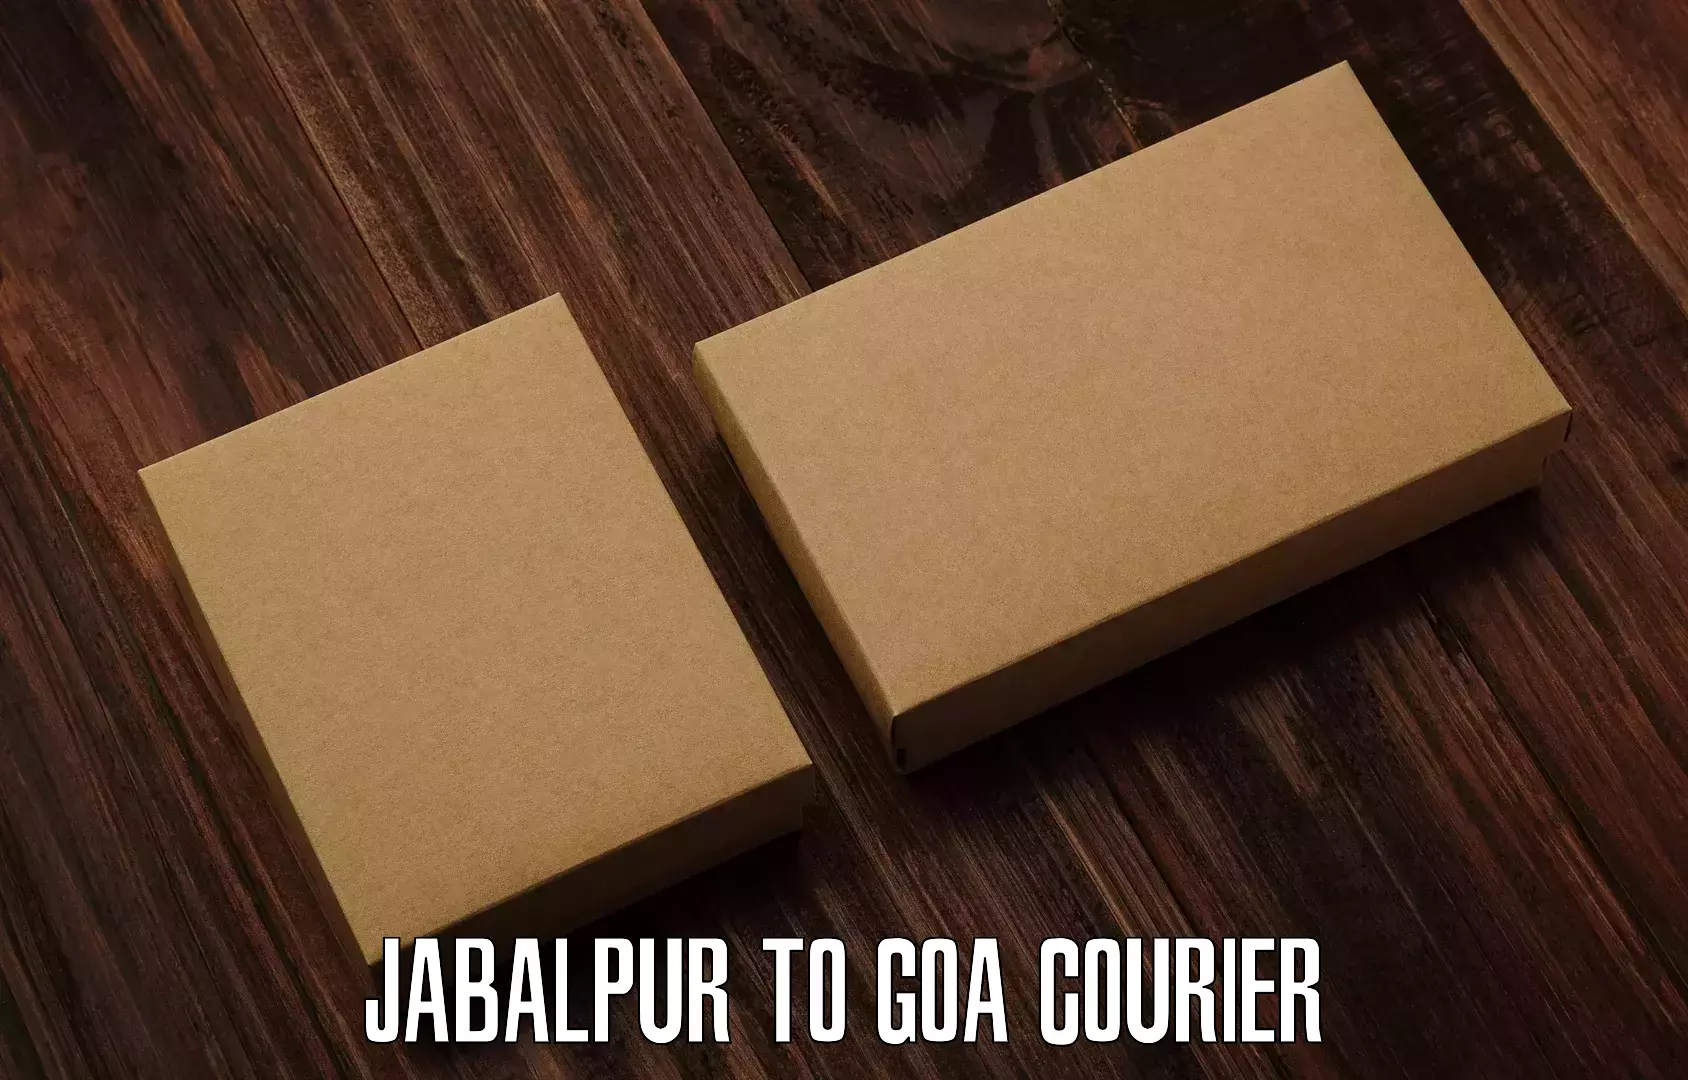 High-priority parcel service Jabalpur to Goa